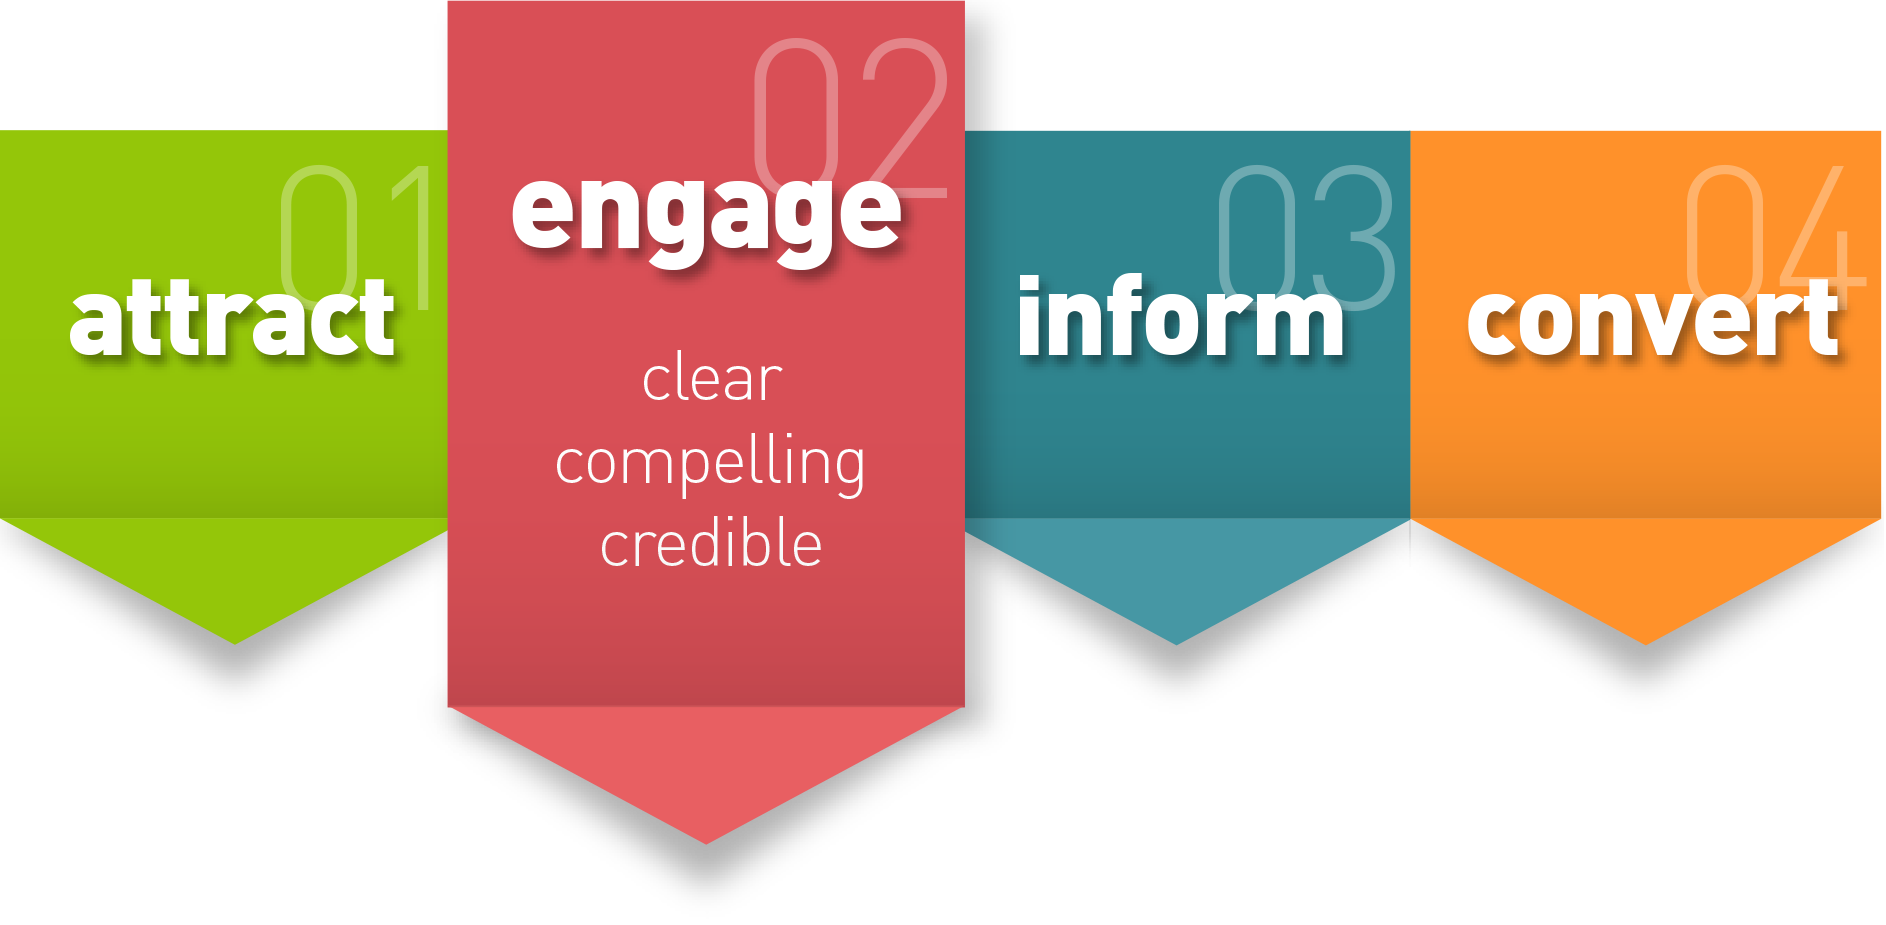 attract engage inform convert diagram